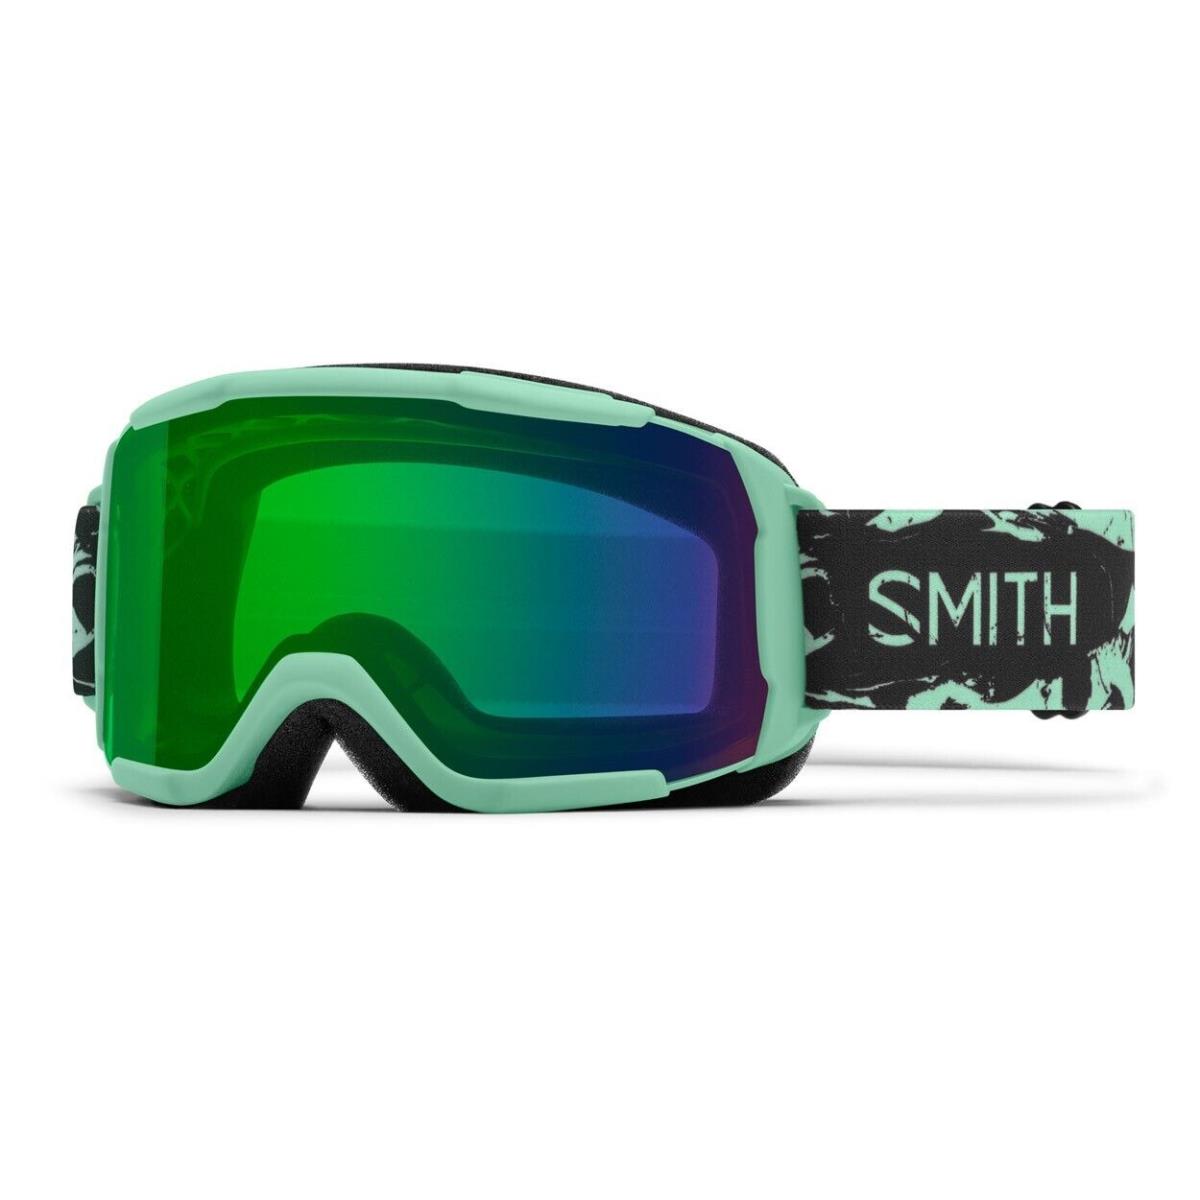 Smith Showcase Otg Snow Goggles Bermuda Marble Everyday Green Mirror Lens